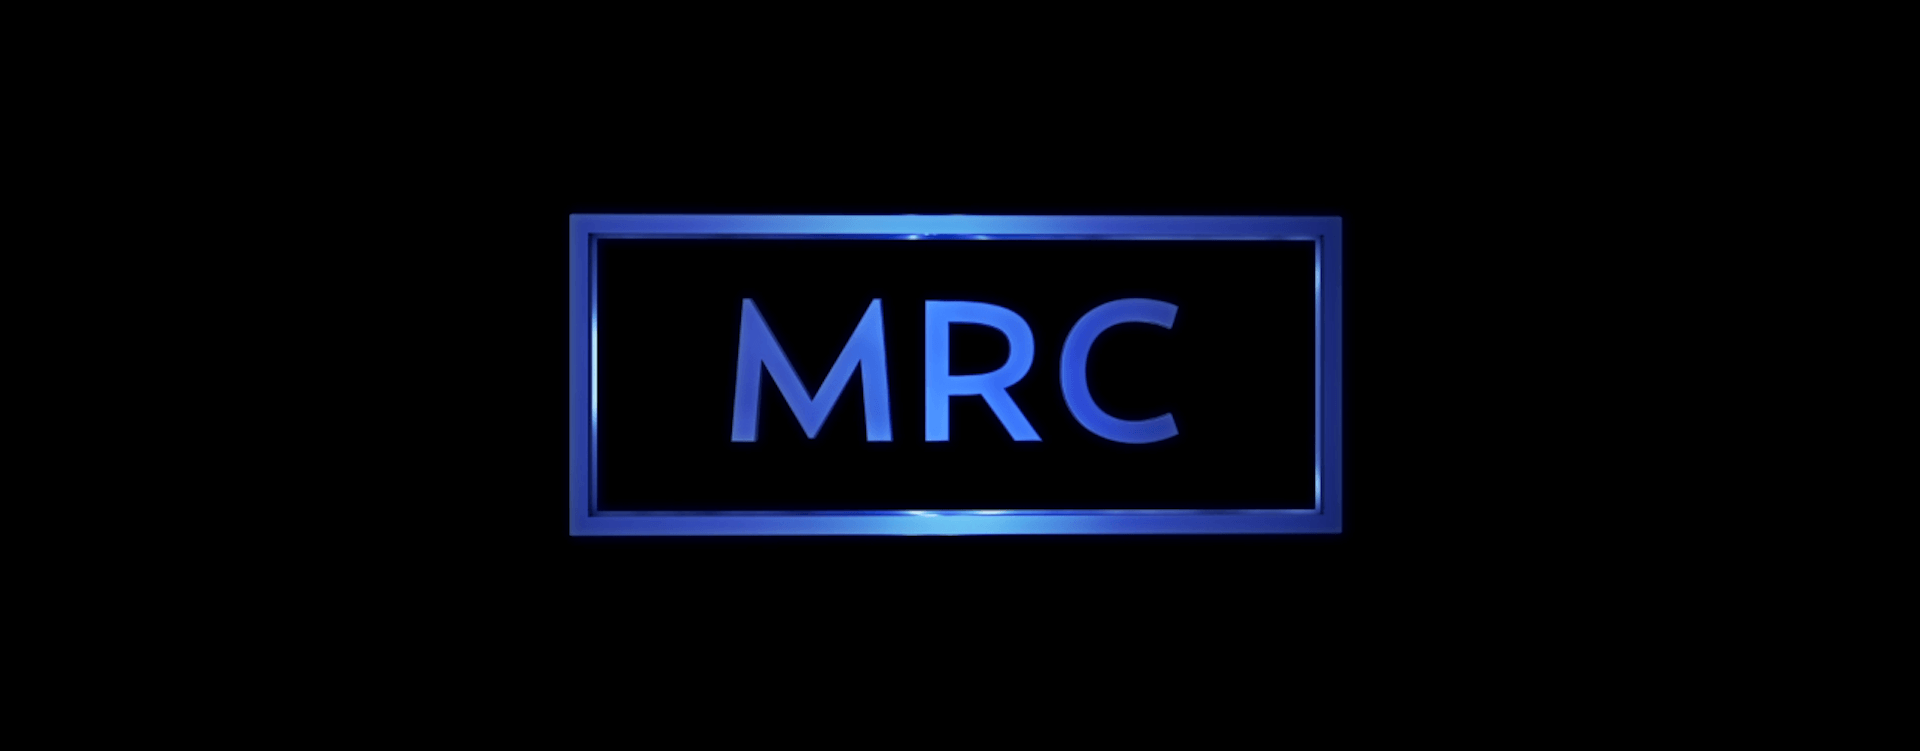 MRC Logo - Image - Mrc logo.png | Crappington Archives Wiki | FANDOM powered by ...